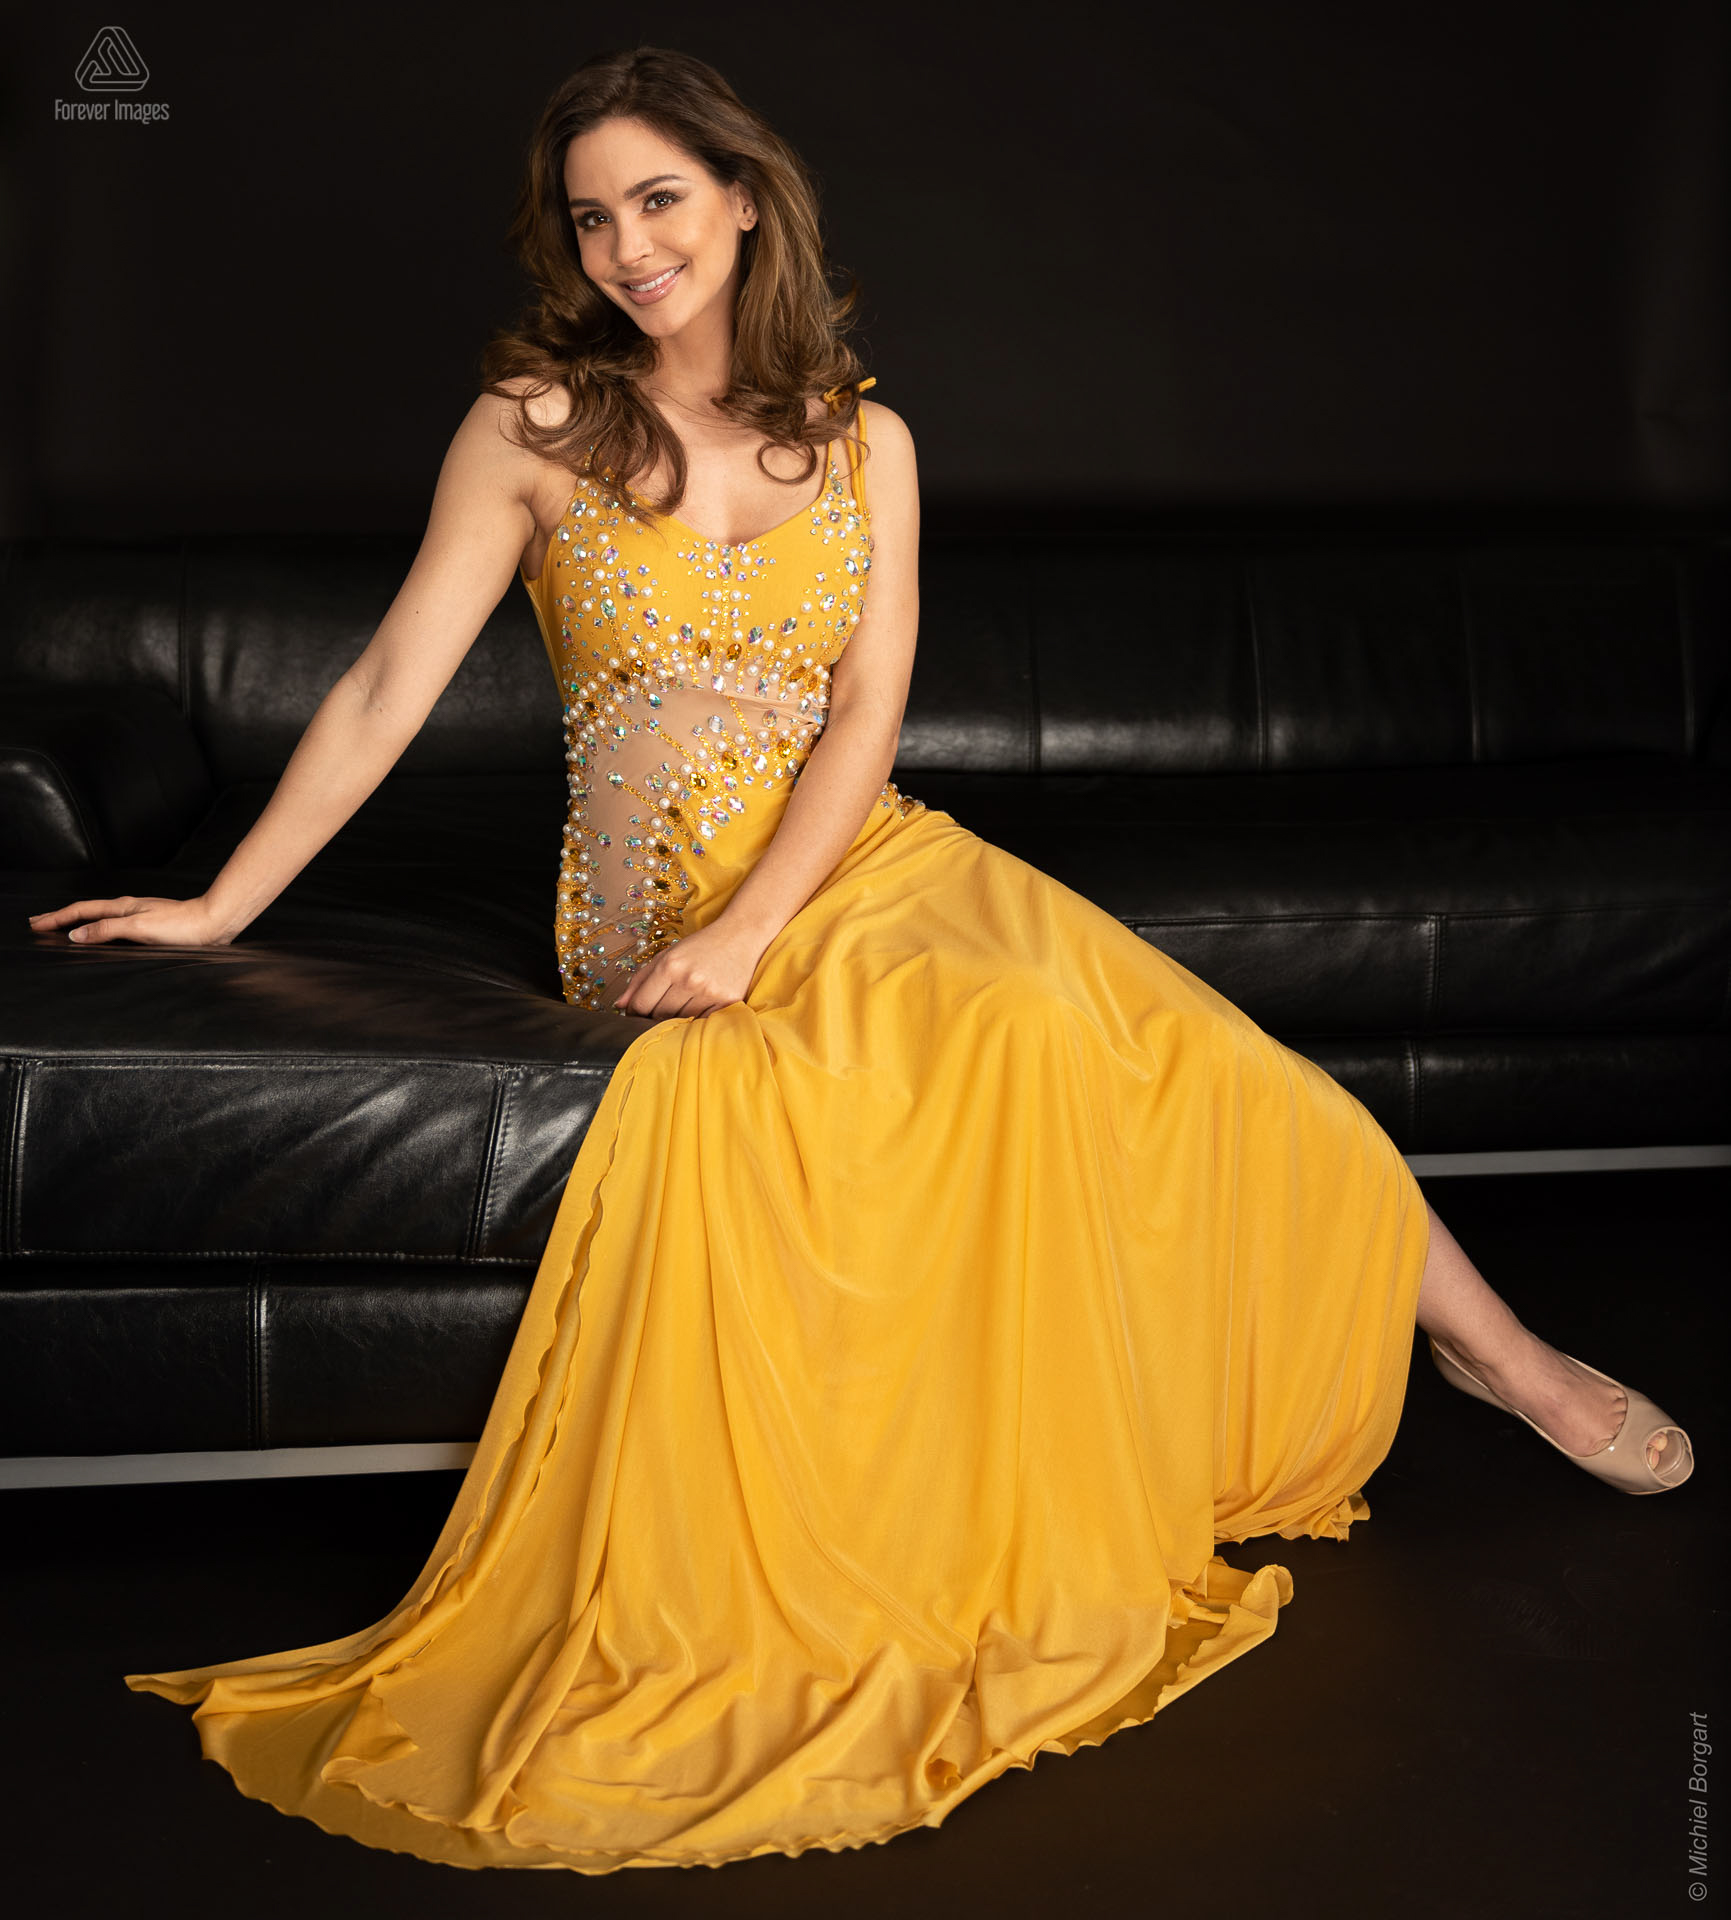 Fashionfoto gele jurk mooie lach | Nathalie den Dekker Miss Universe World Netherlands International | Fashionfotograaf Michiel Borgart - Forever Images.